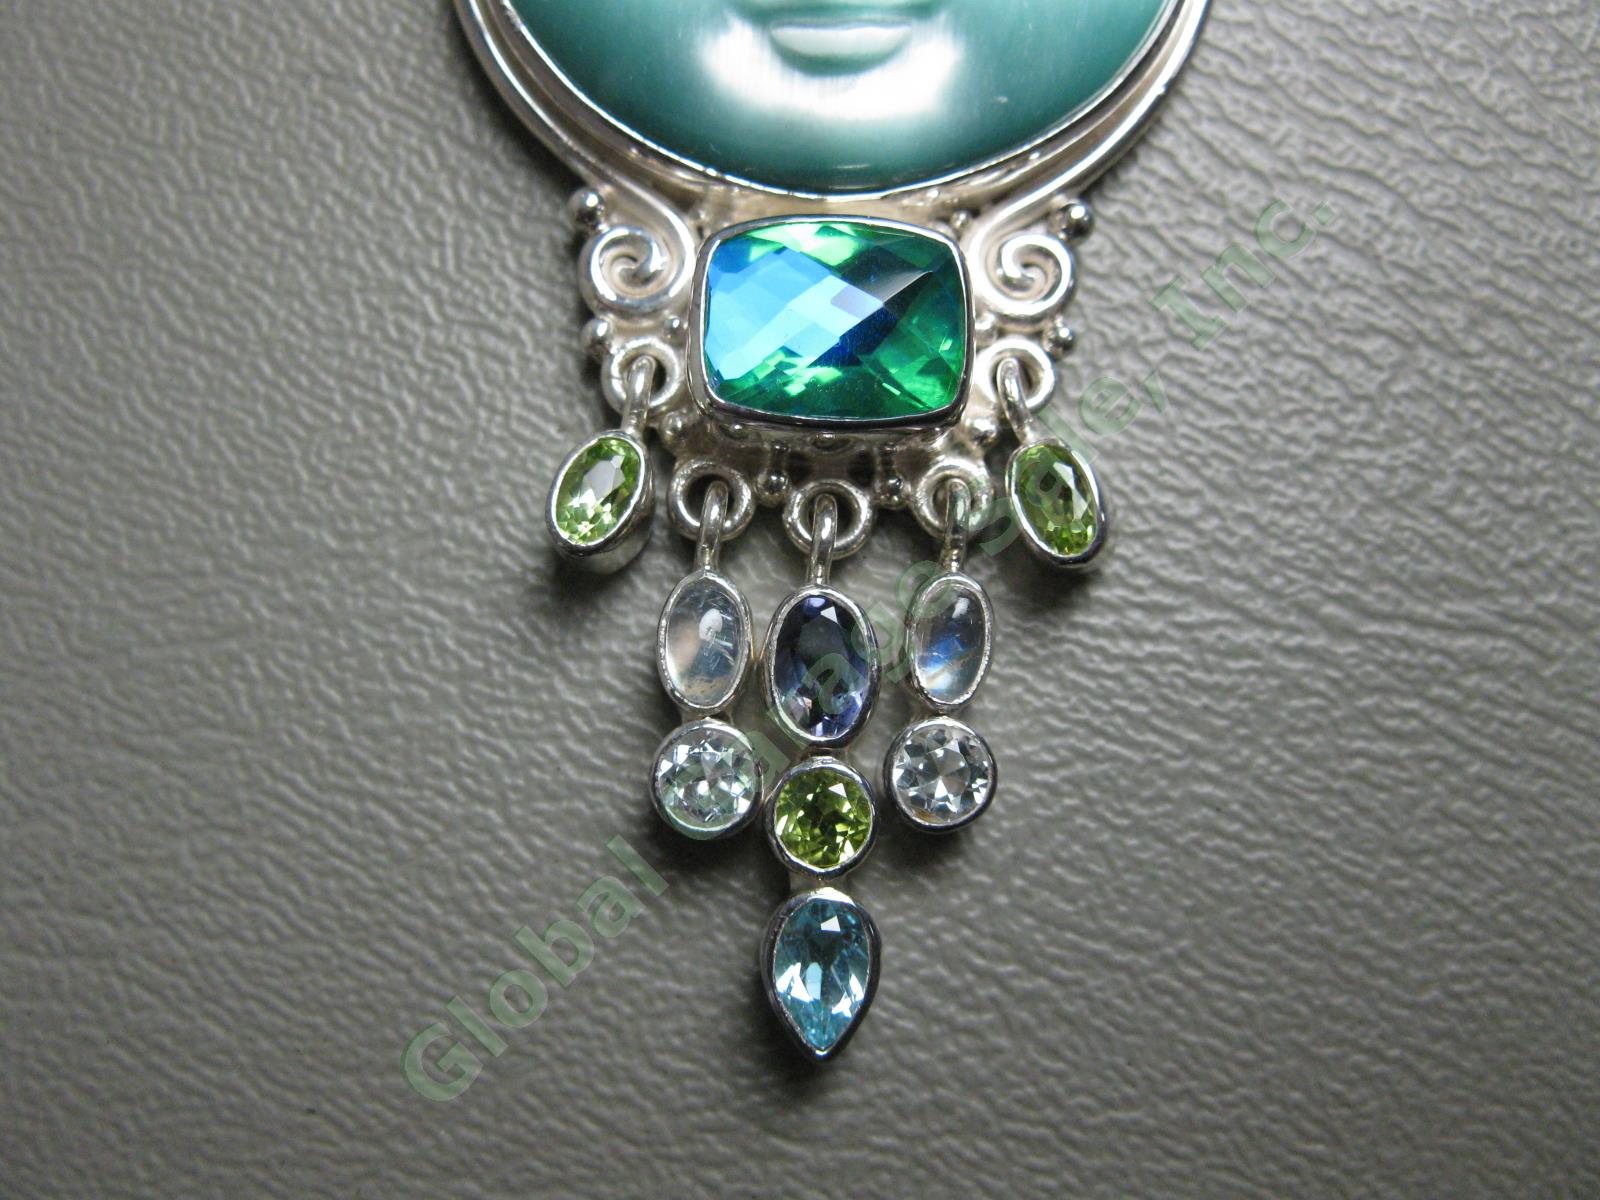 NEW Sajen Goddess Pendant Necklace Large Multi Gemstones Sterling Silver NO RES! 2